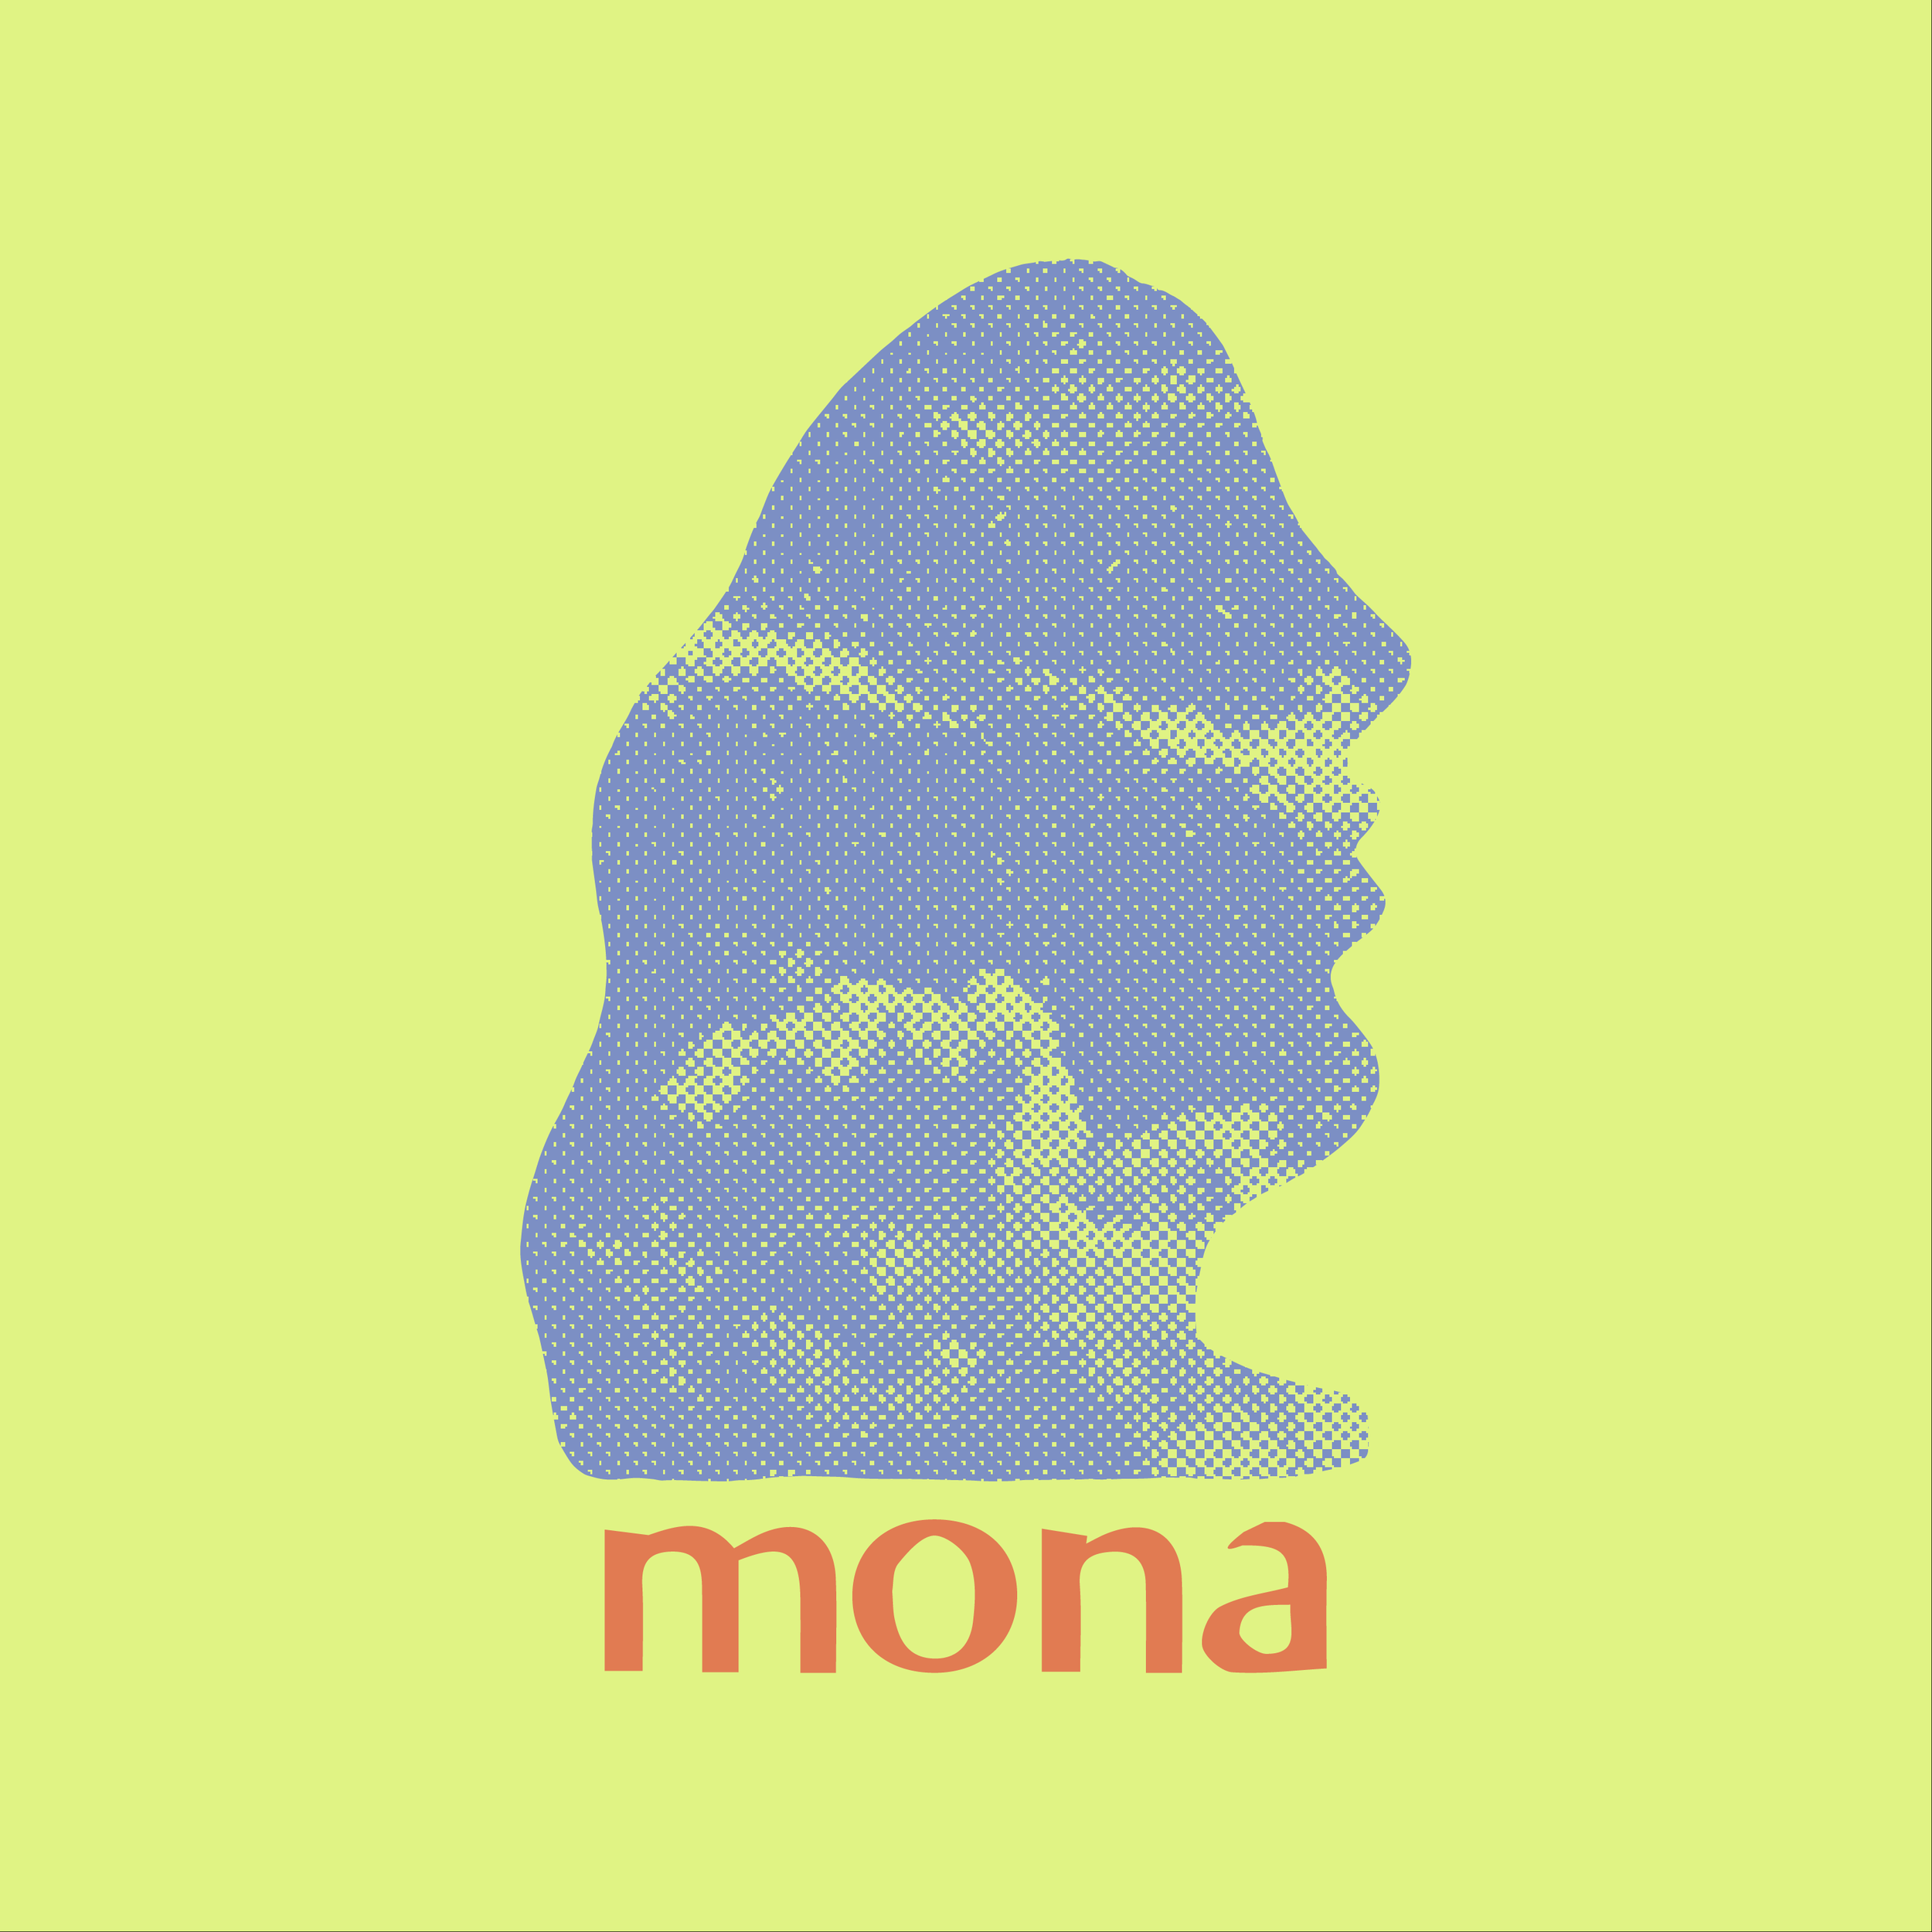 mona_square_skyhead_yellow_logo-01.png